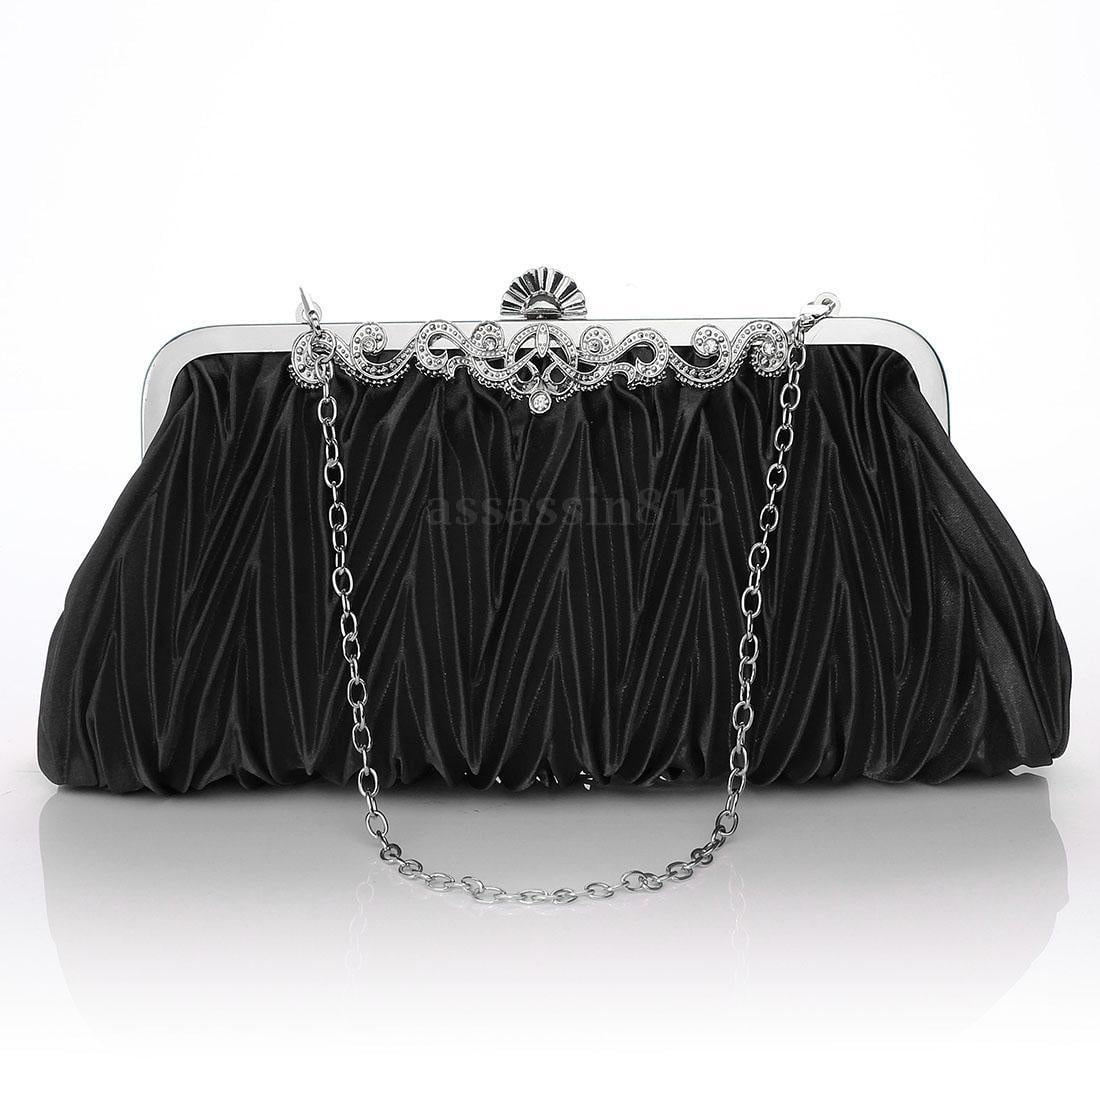 Black Diamante Crystal Satin Bridal Wedding Prom Purse Clutch Bag Handbag UK 